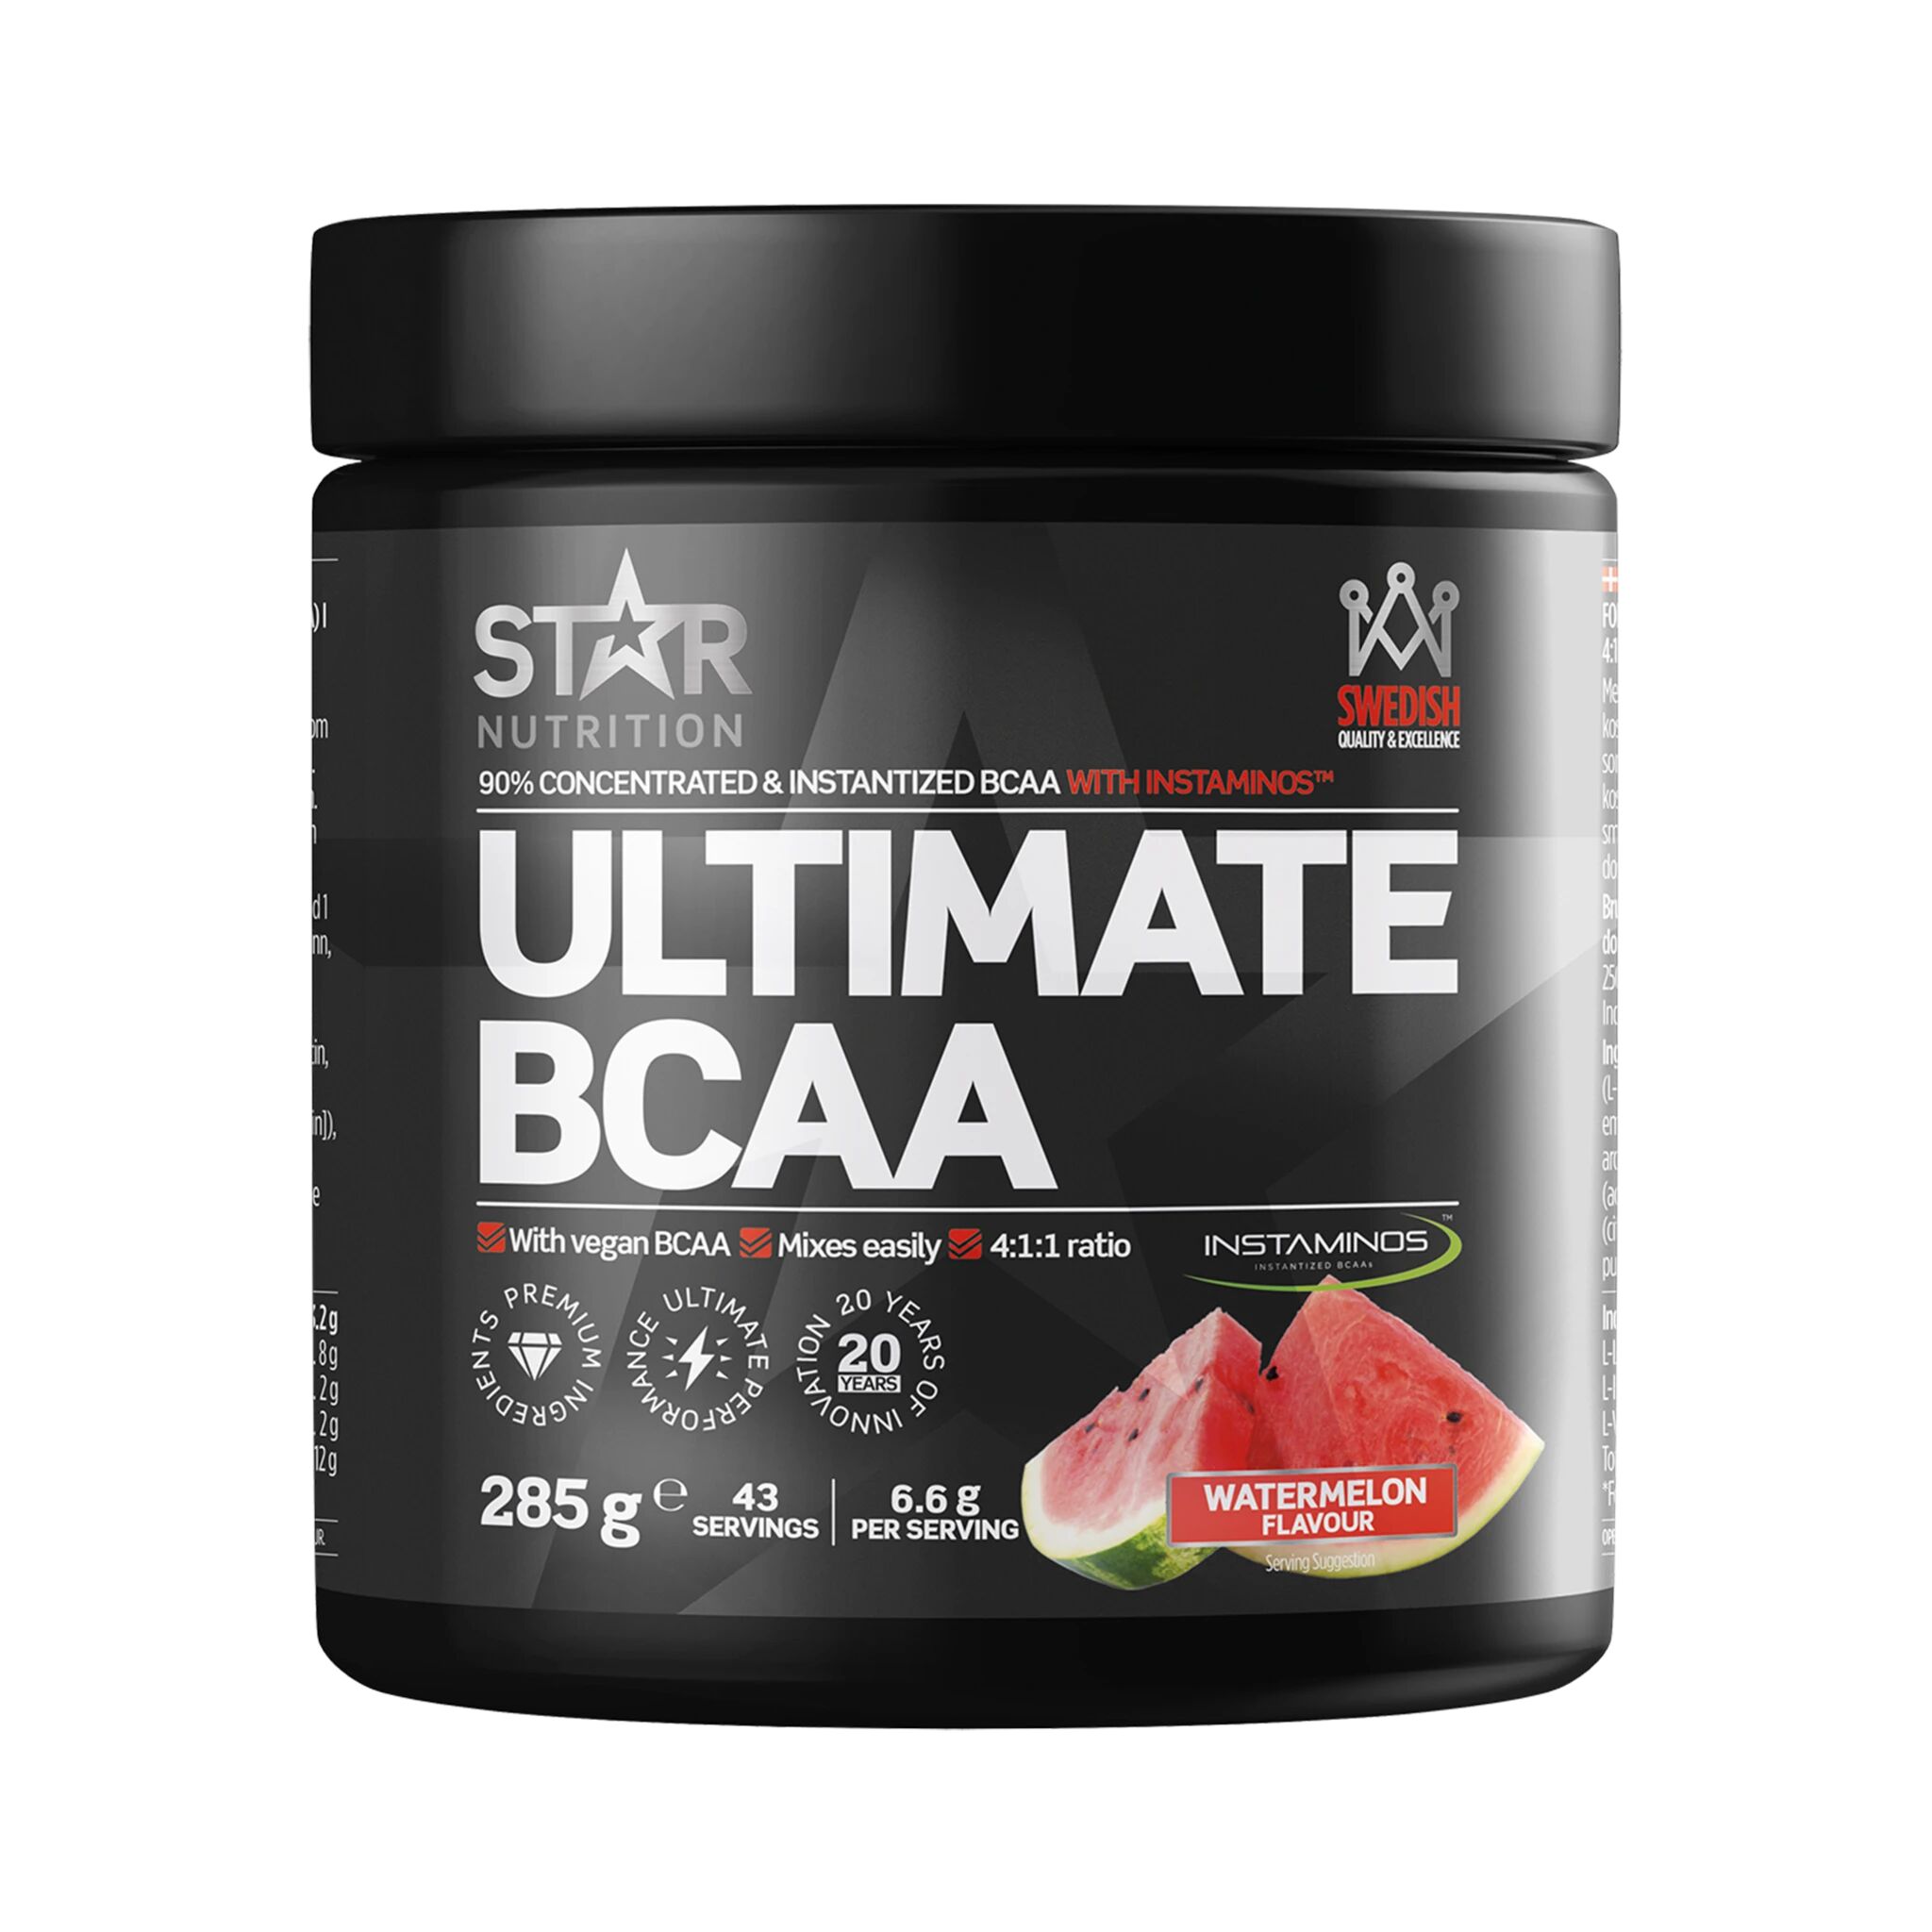 Star Nutrition Ultimate BCAA 285 g 285g Watermelon